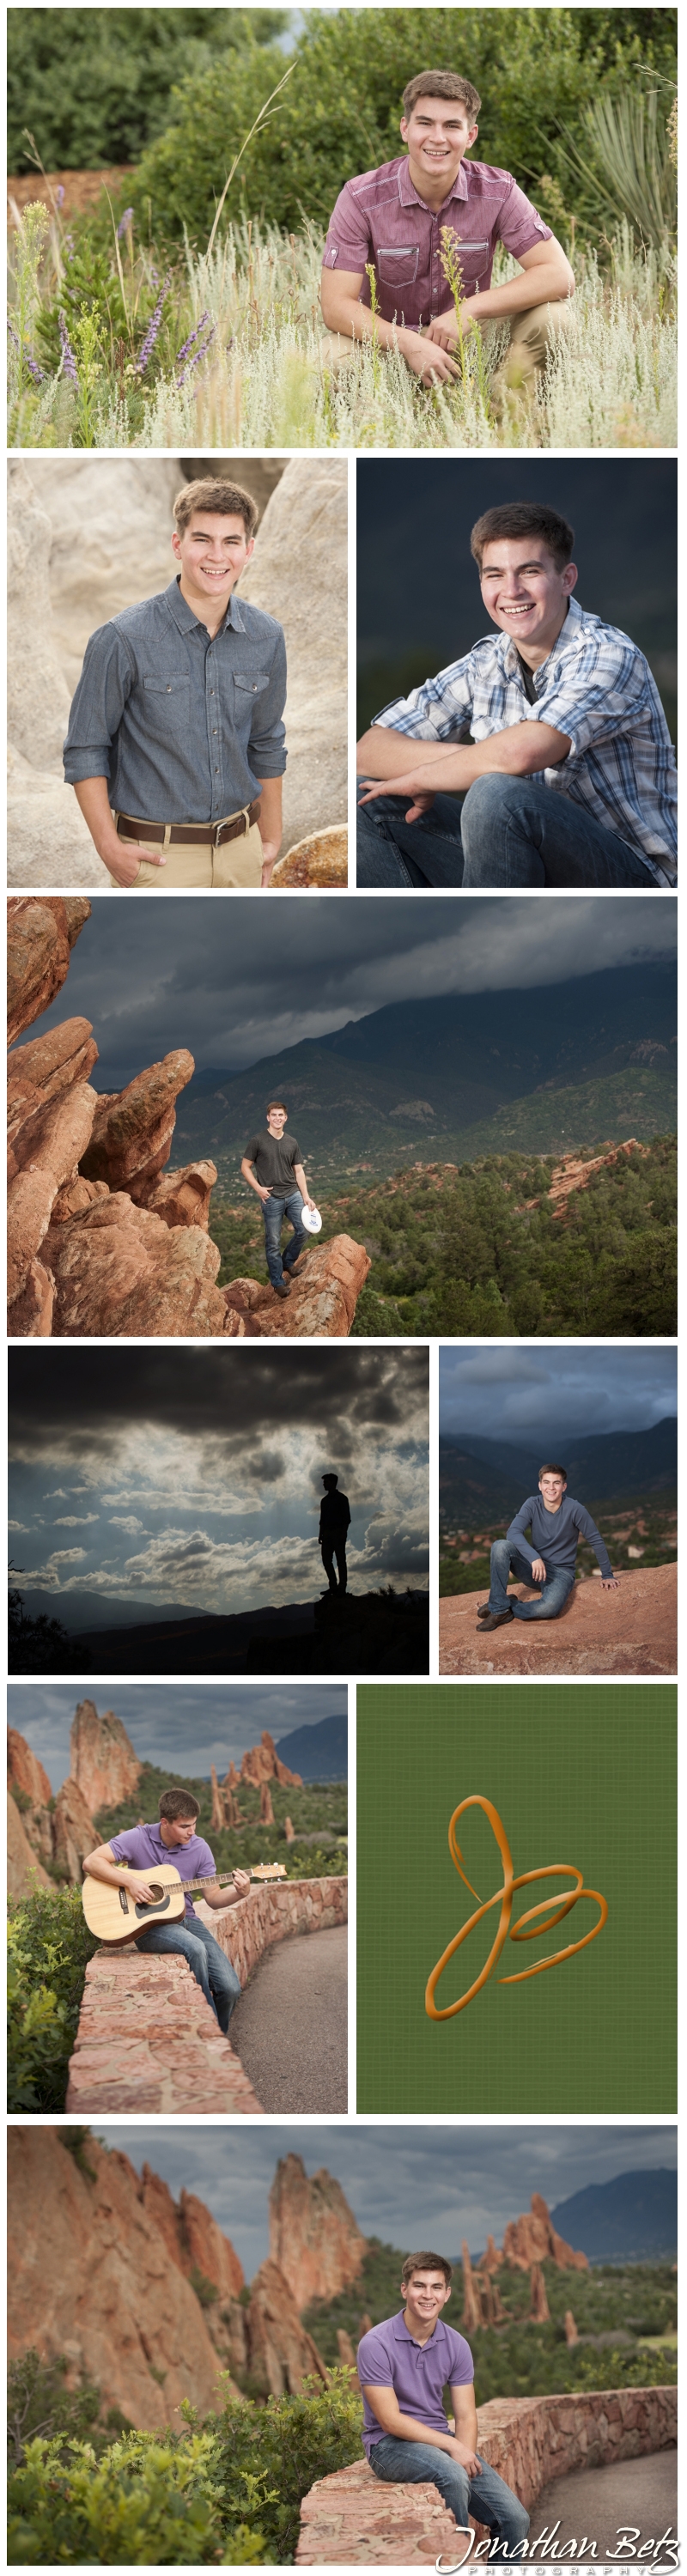 Colorado Springs High School Senior Pictures Jonathan Betz Photography 2015